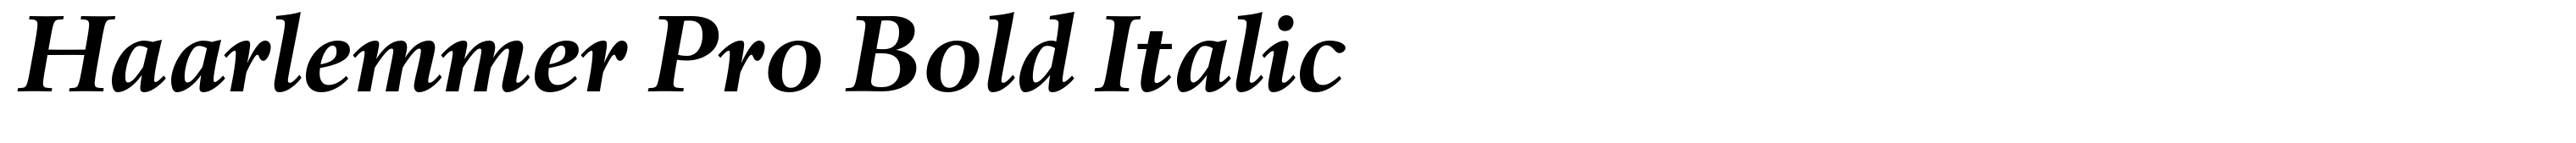 Haarlemmer Pro Bold Italic